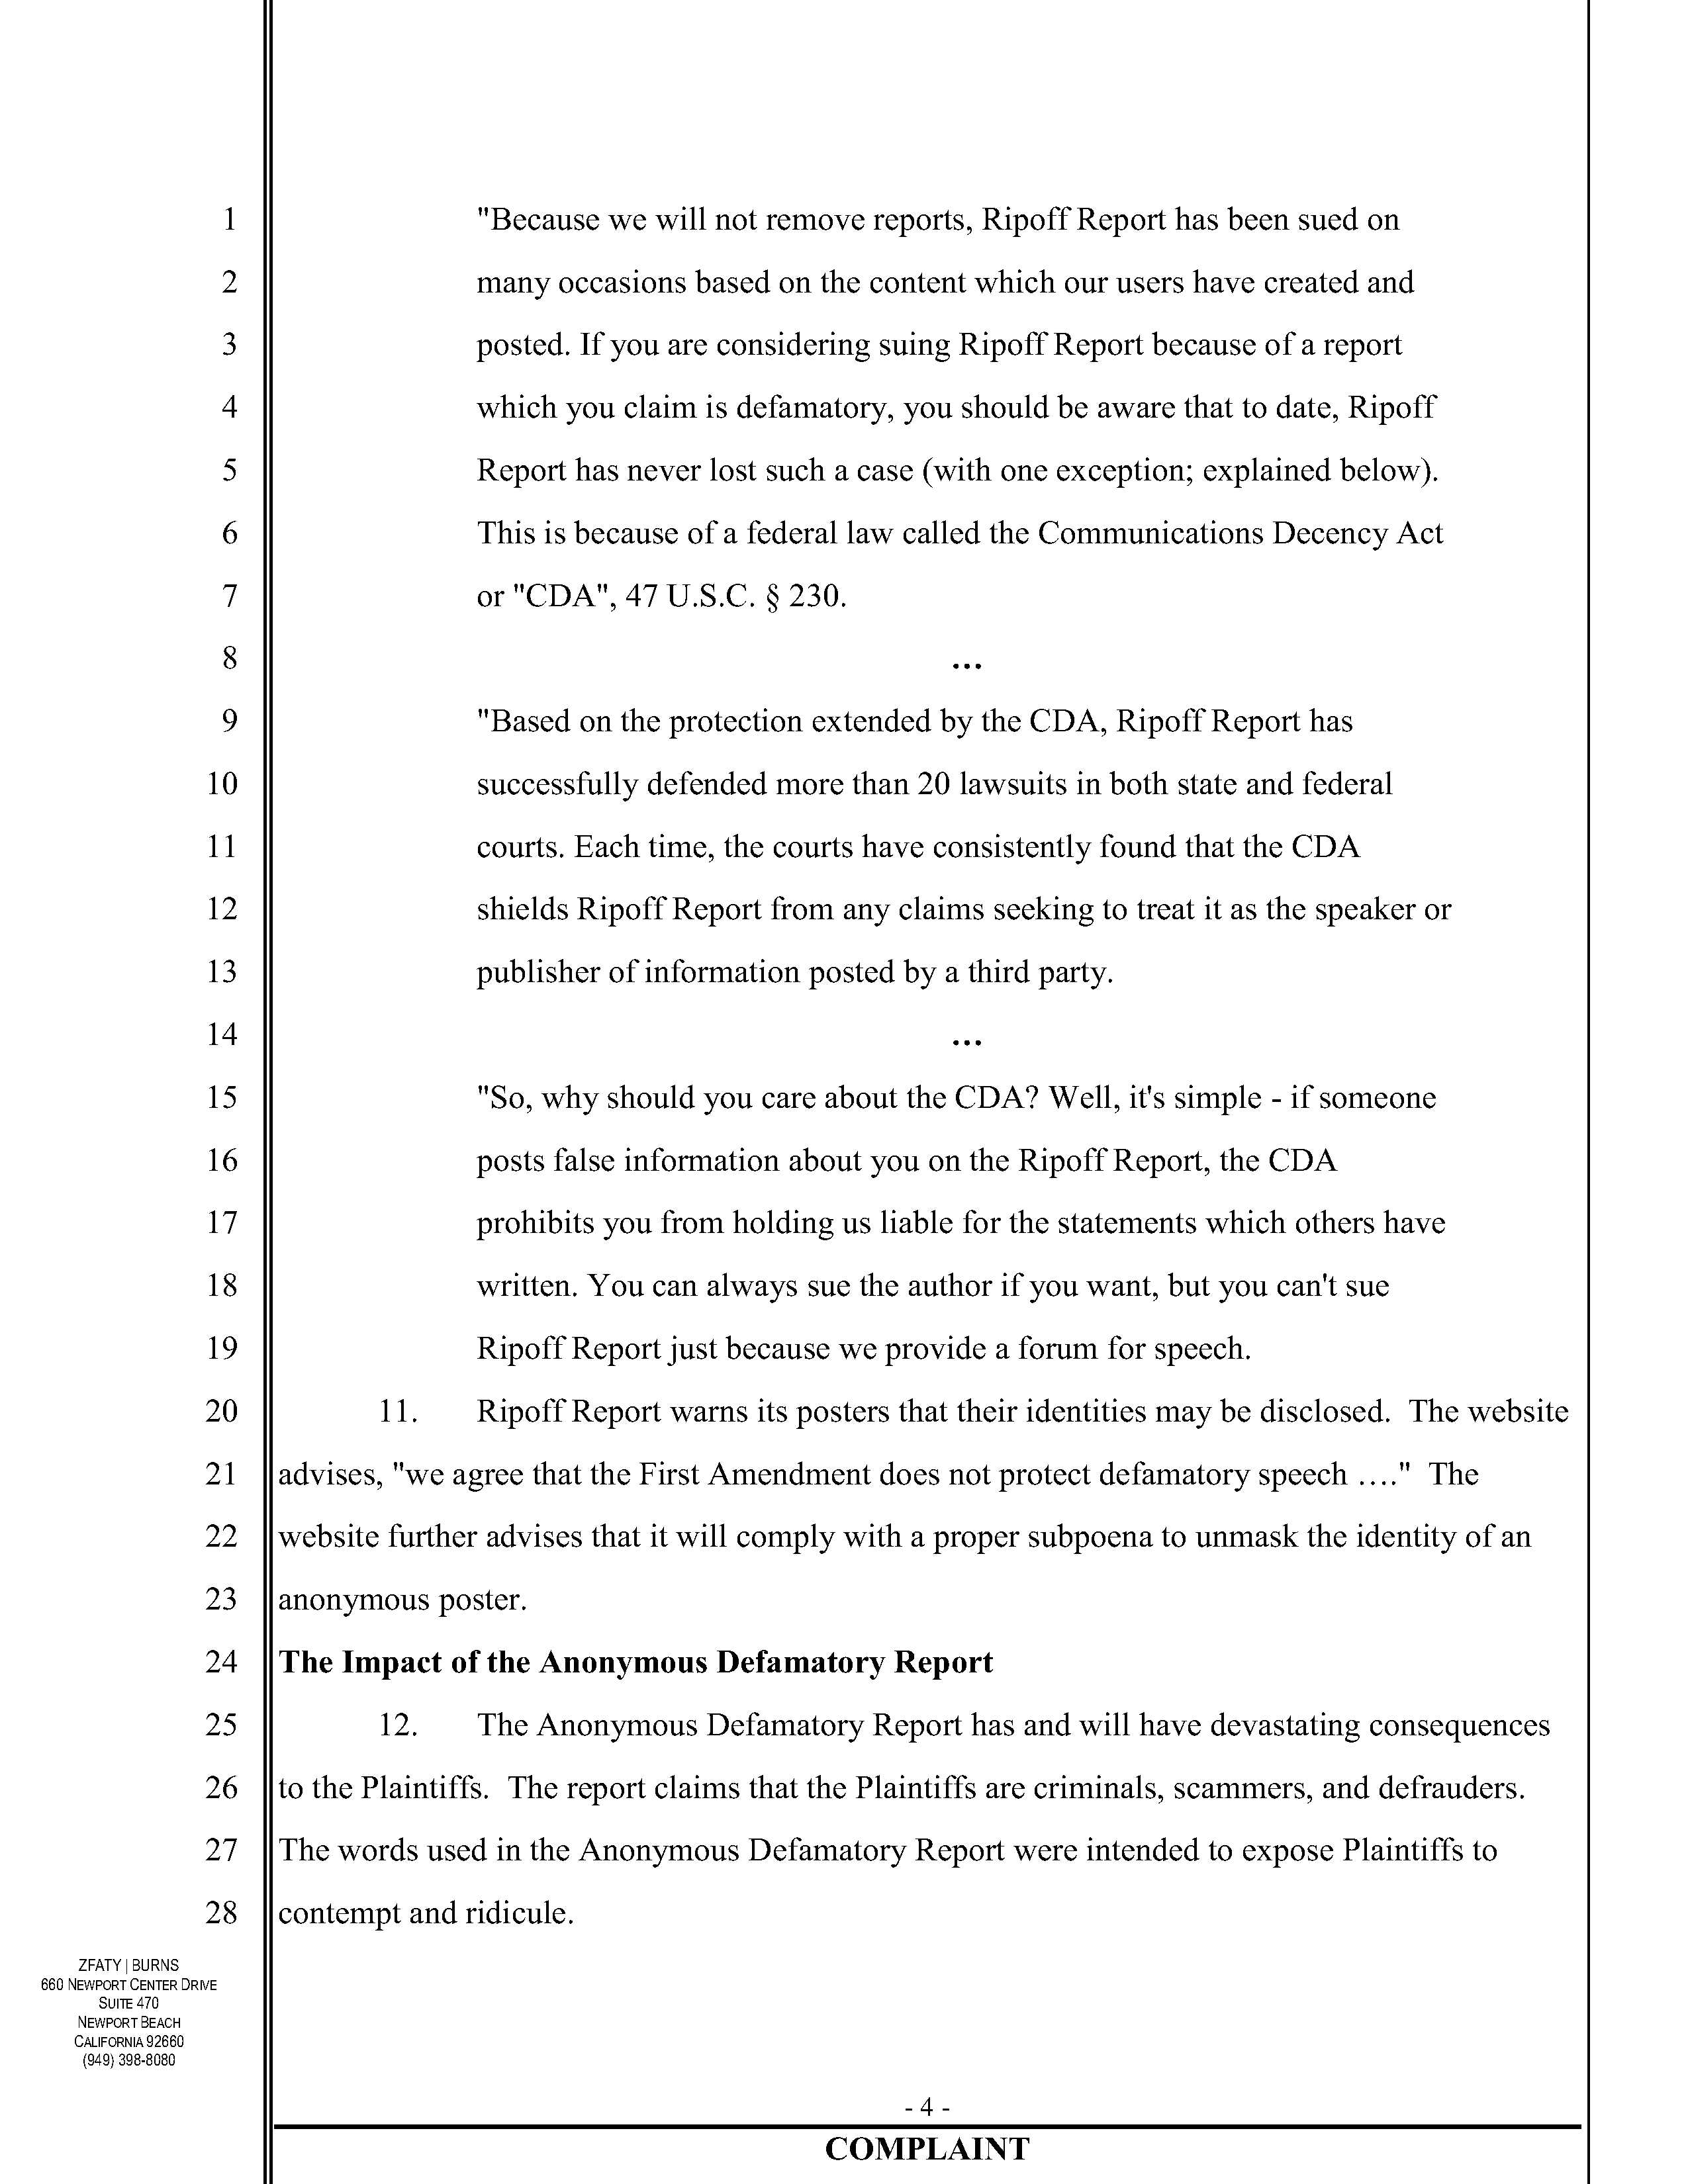 Court Conformed Copy of Complaint, page 5